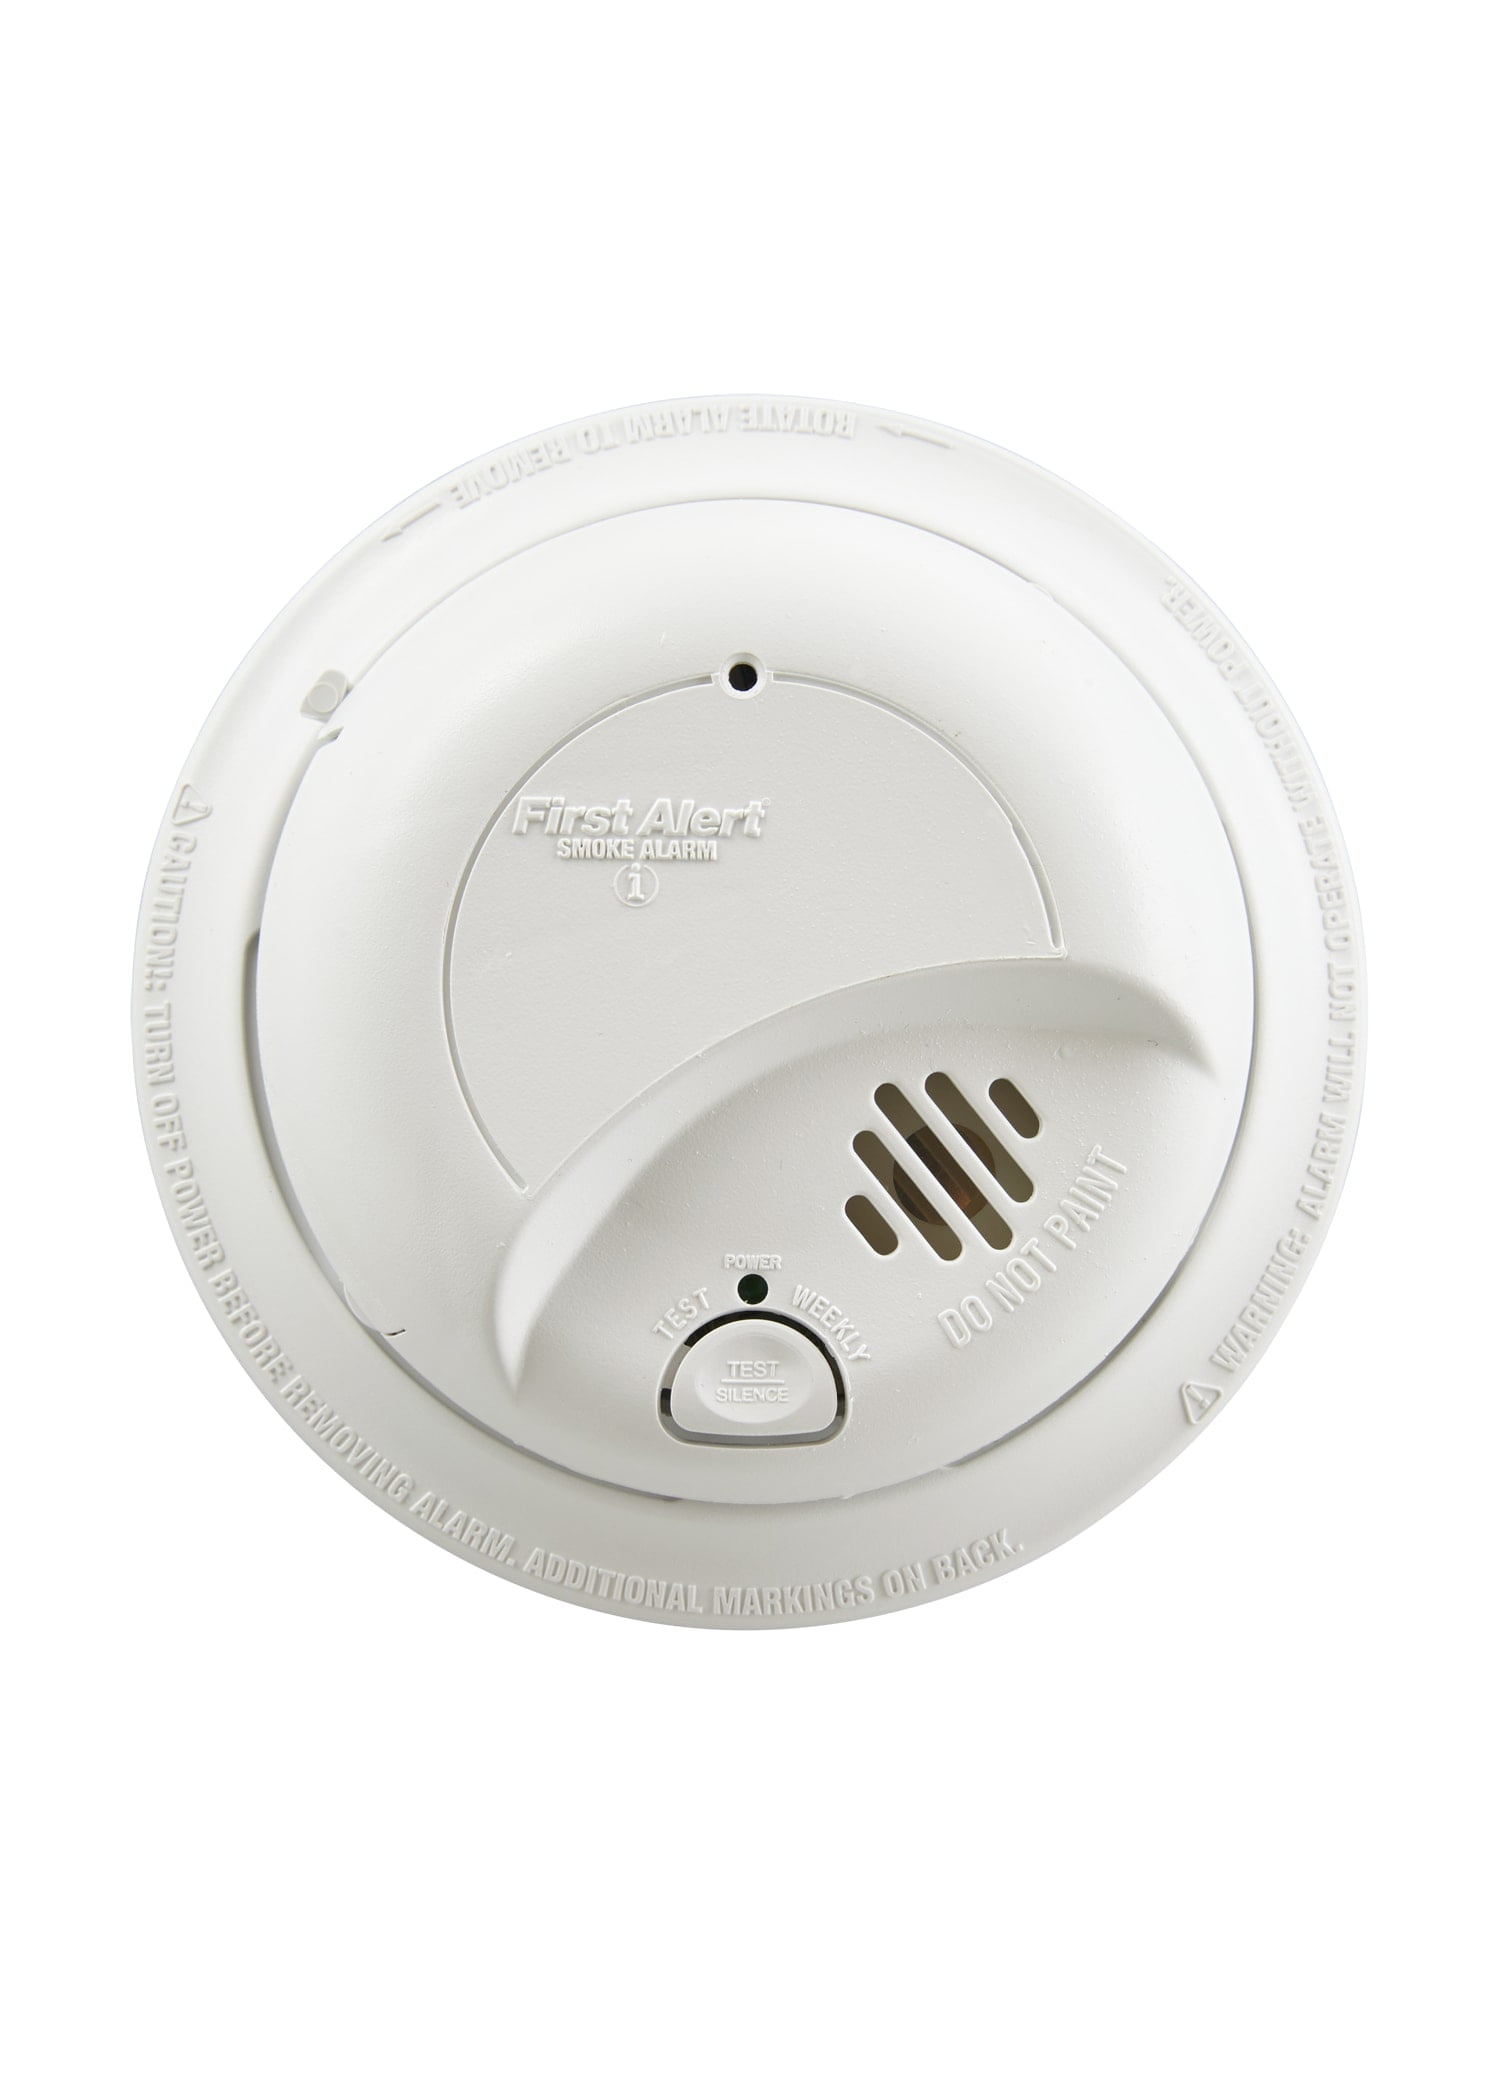 Smoke Detector Alarm Quick Detect Ionization Sensor Hard Wire Fire Alert 6 Pcs 